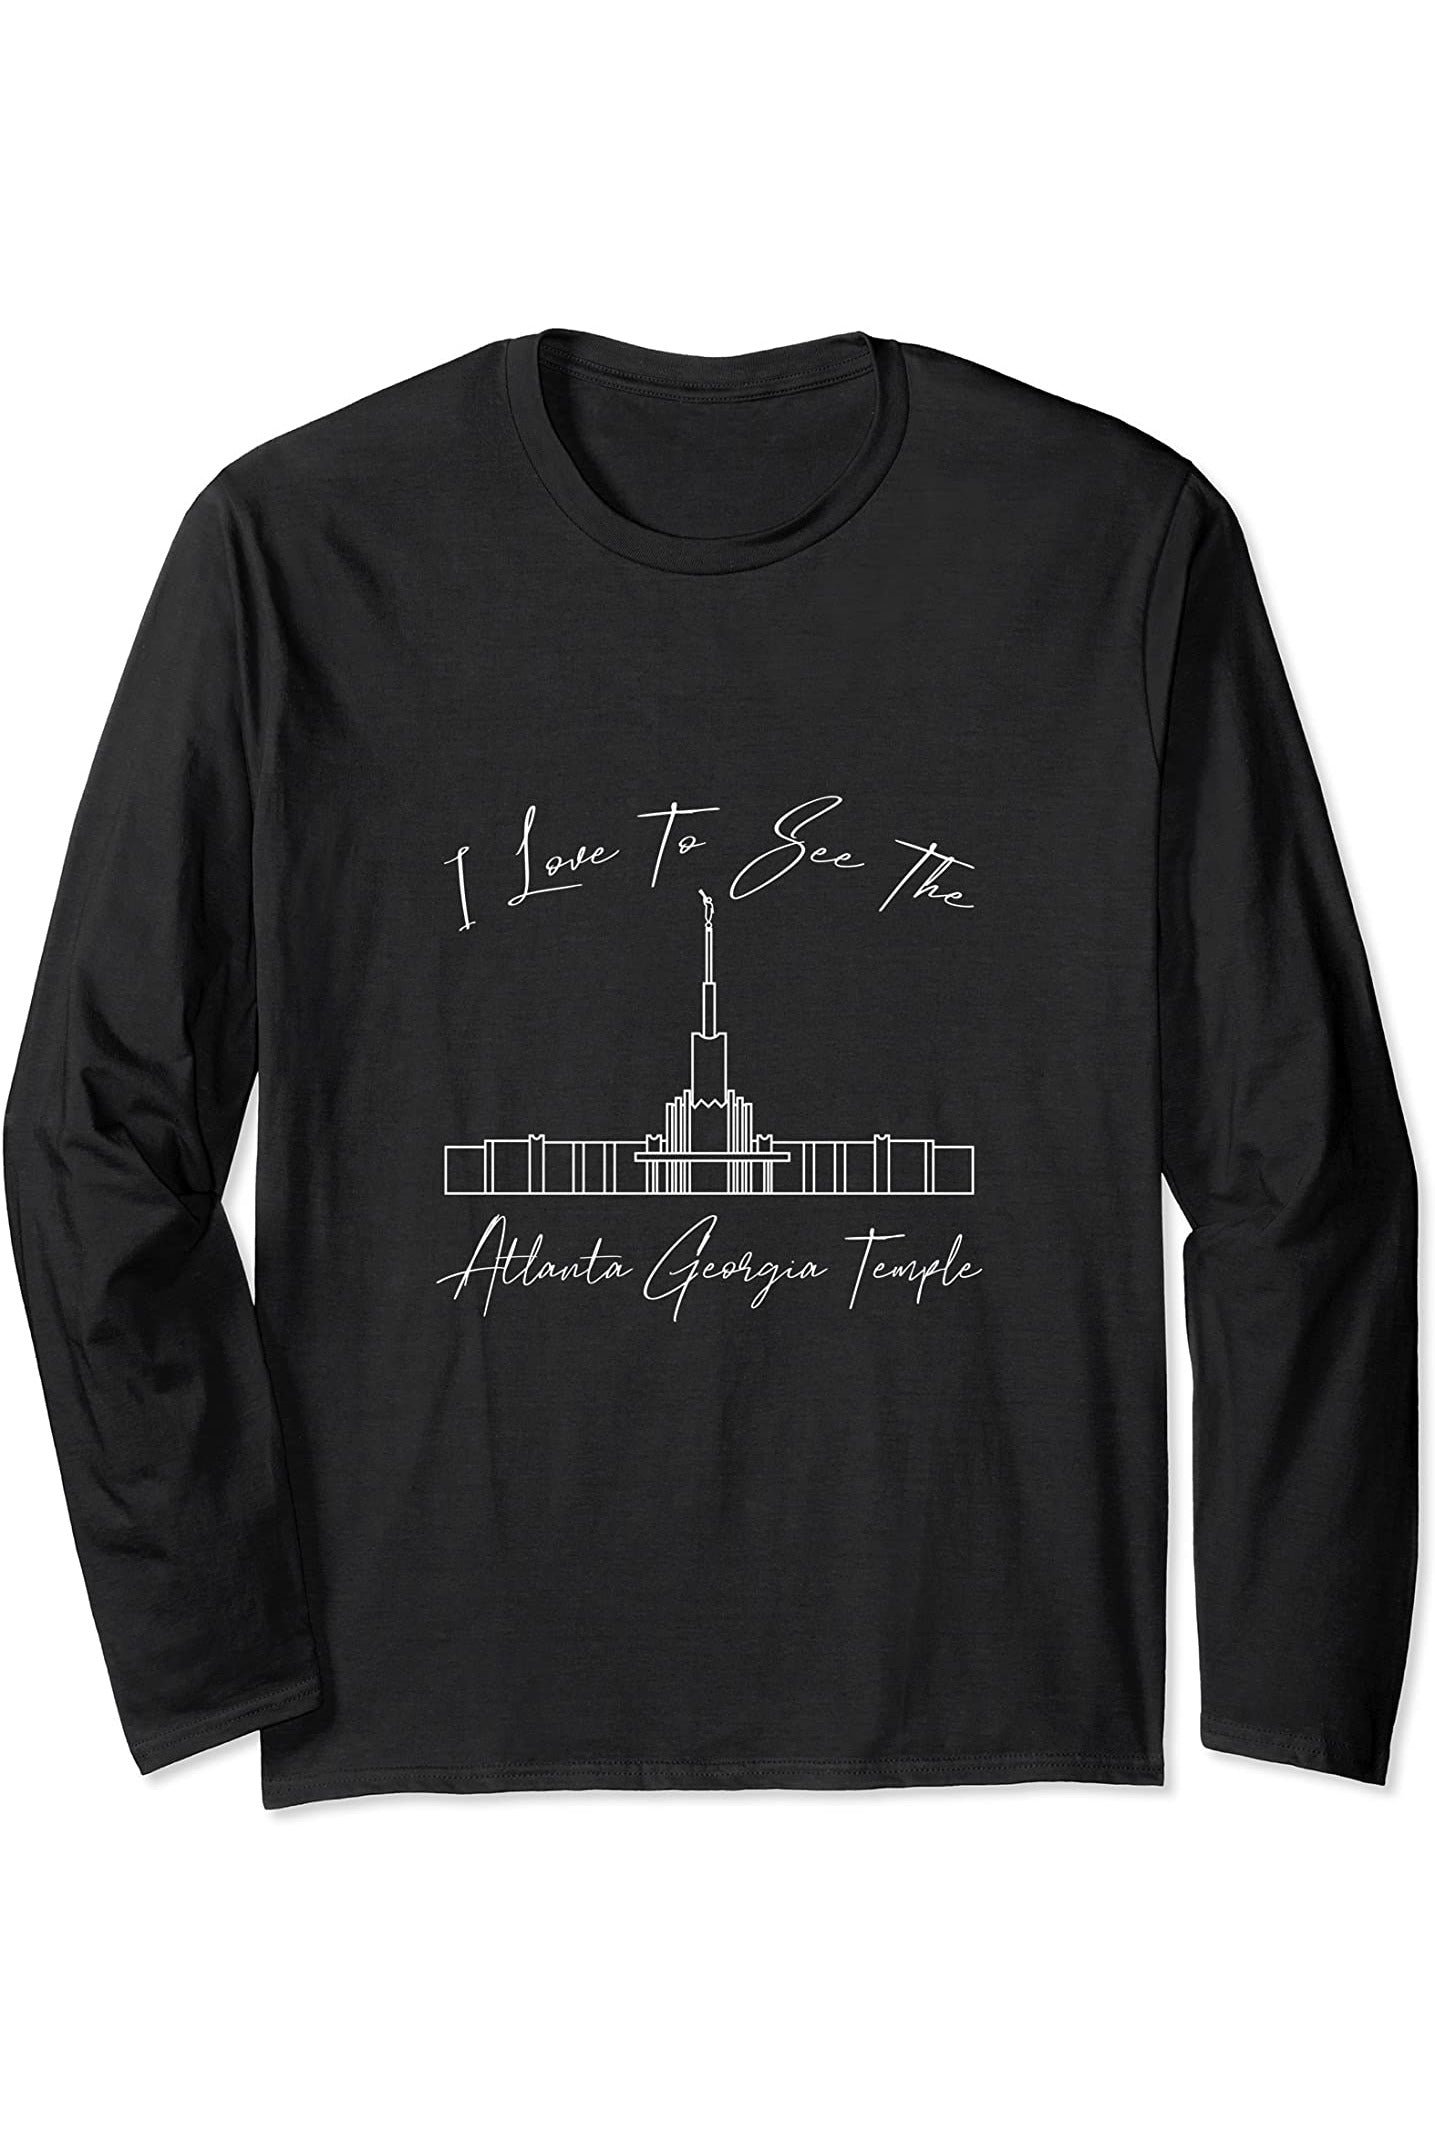 Atlanta Georgia Temple Long Sleeve T-Shirt - Calligraphy Style (English) US